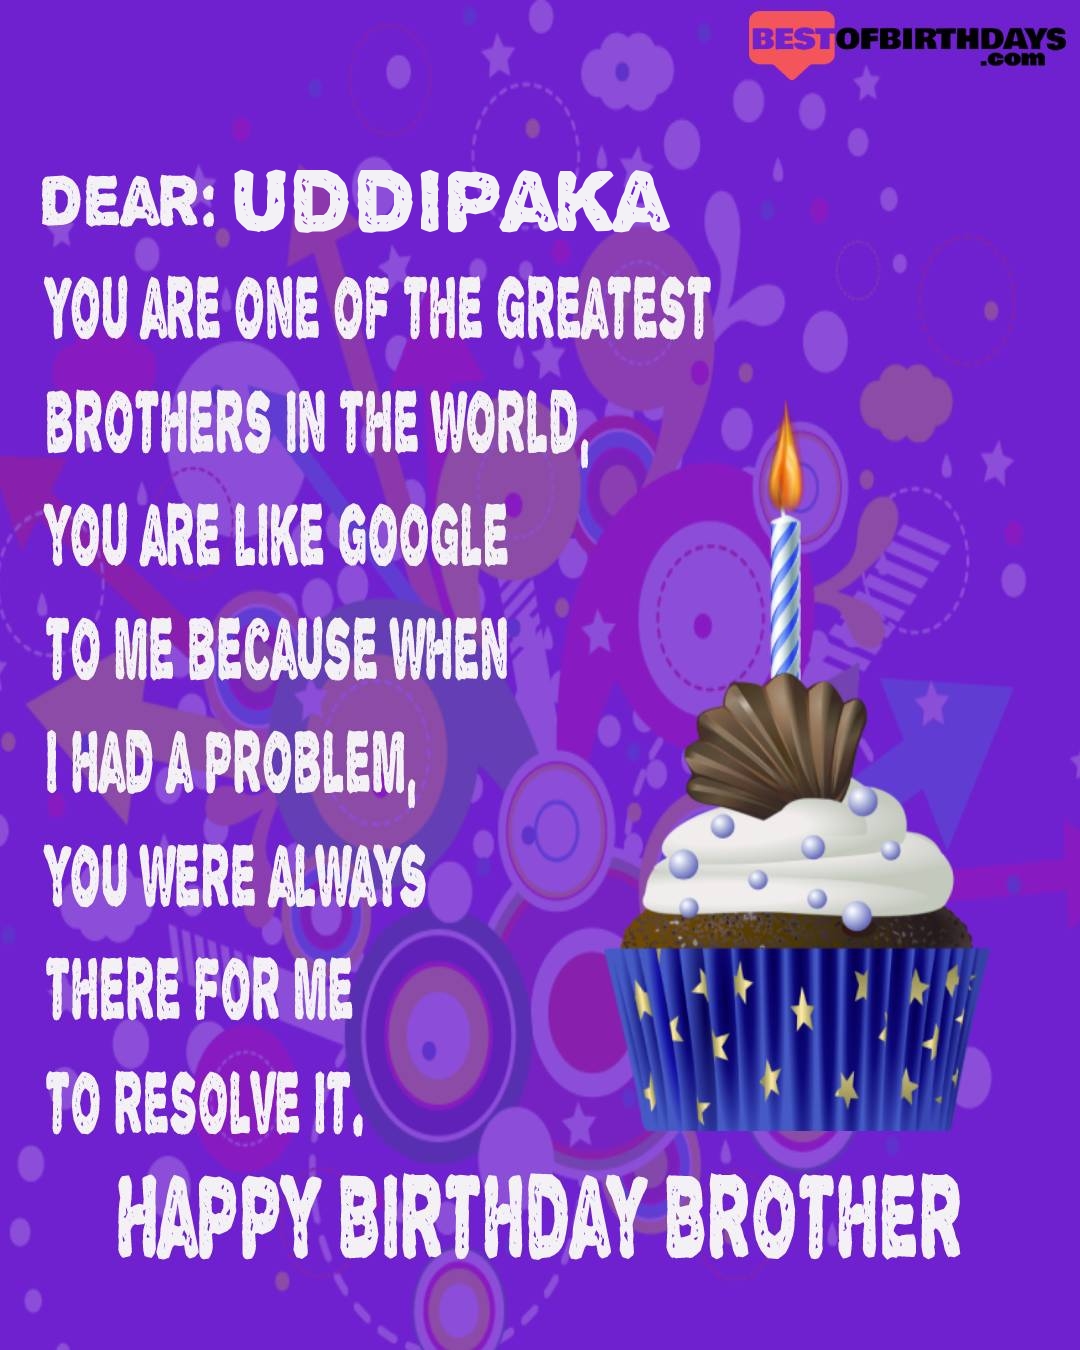 Happy birthday uddipaka bhai brother bro